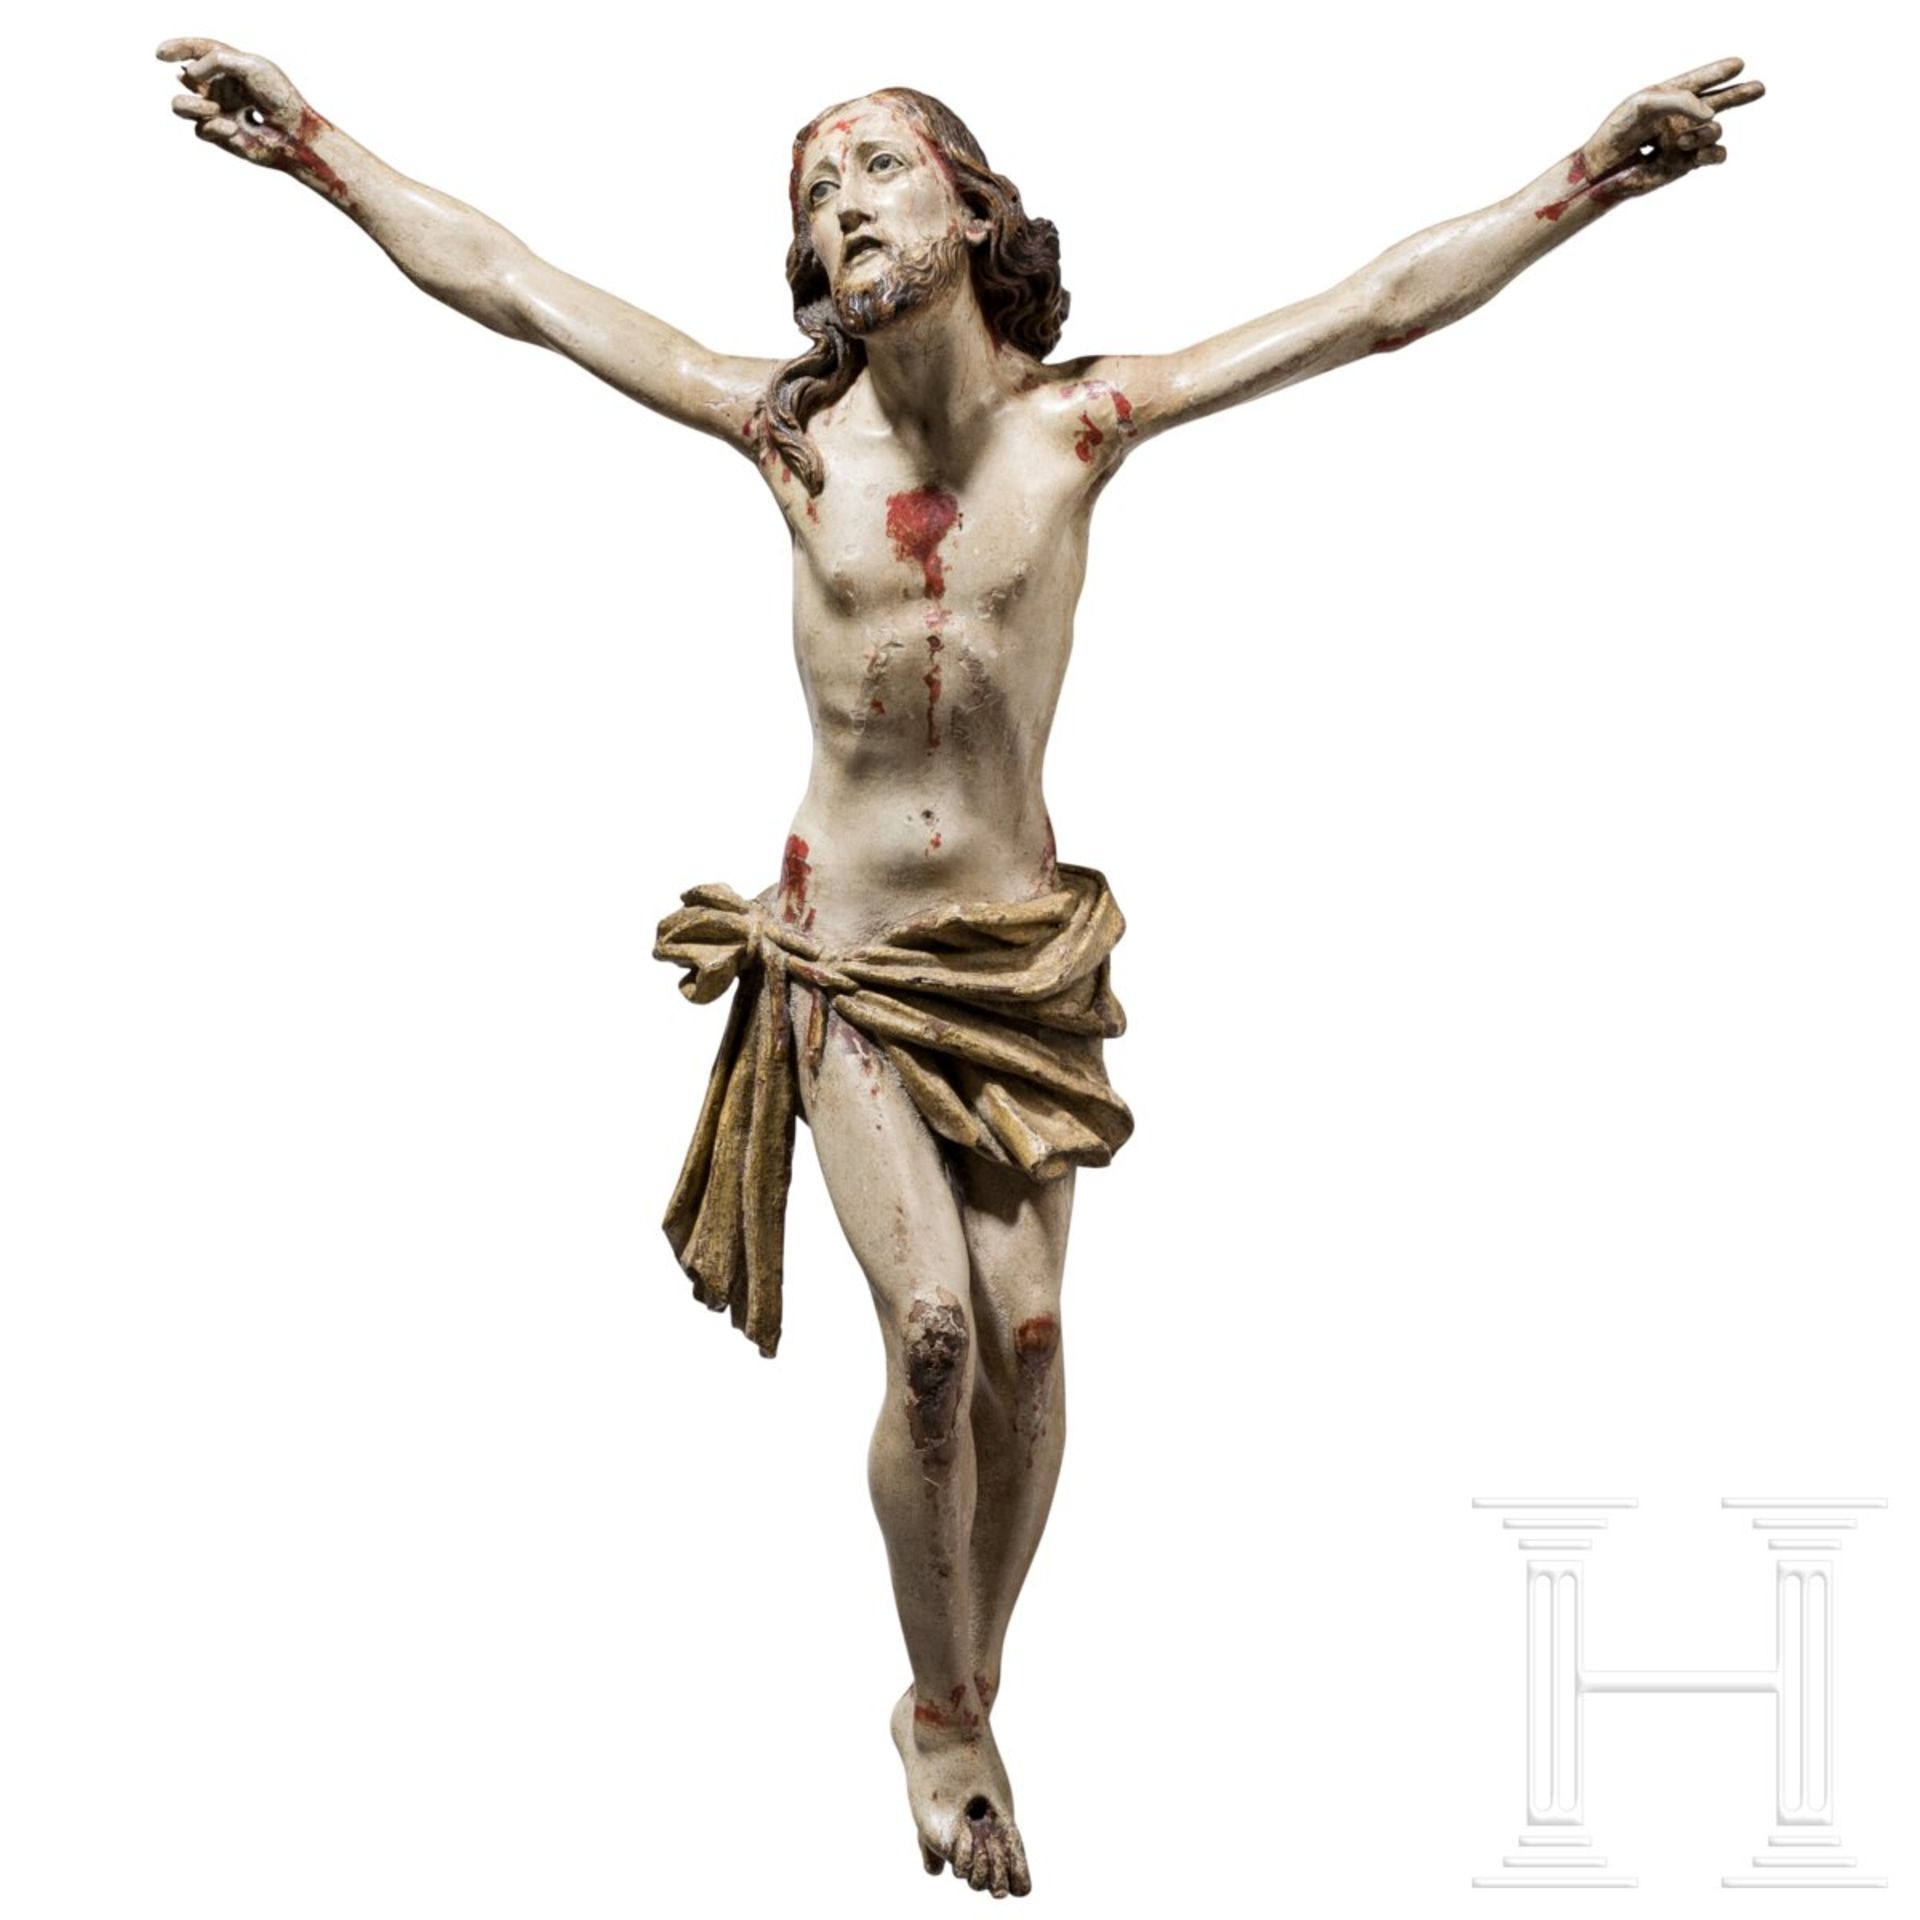 Kruzifixus, wohl Italien, um 1600